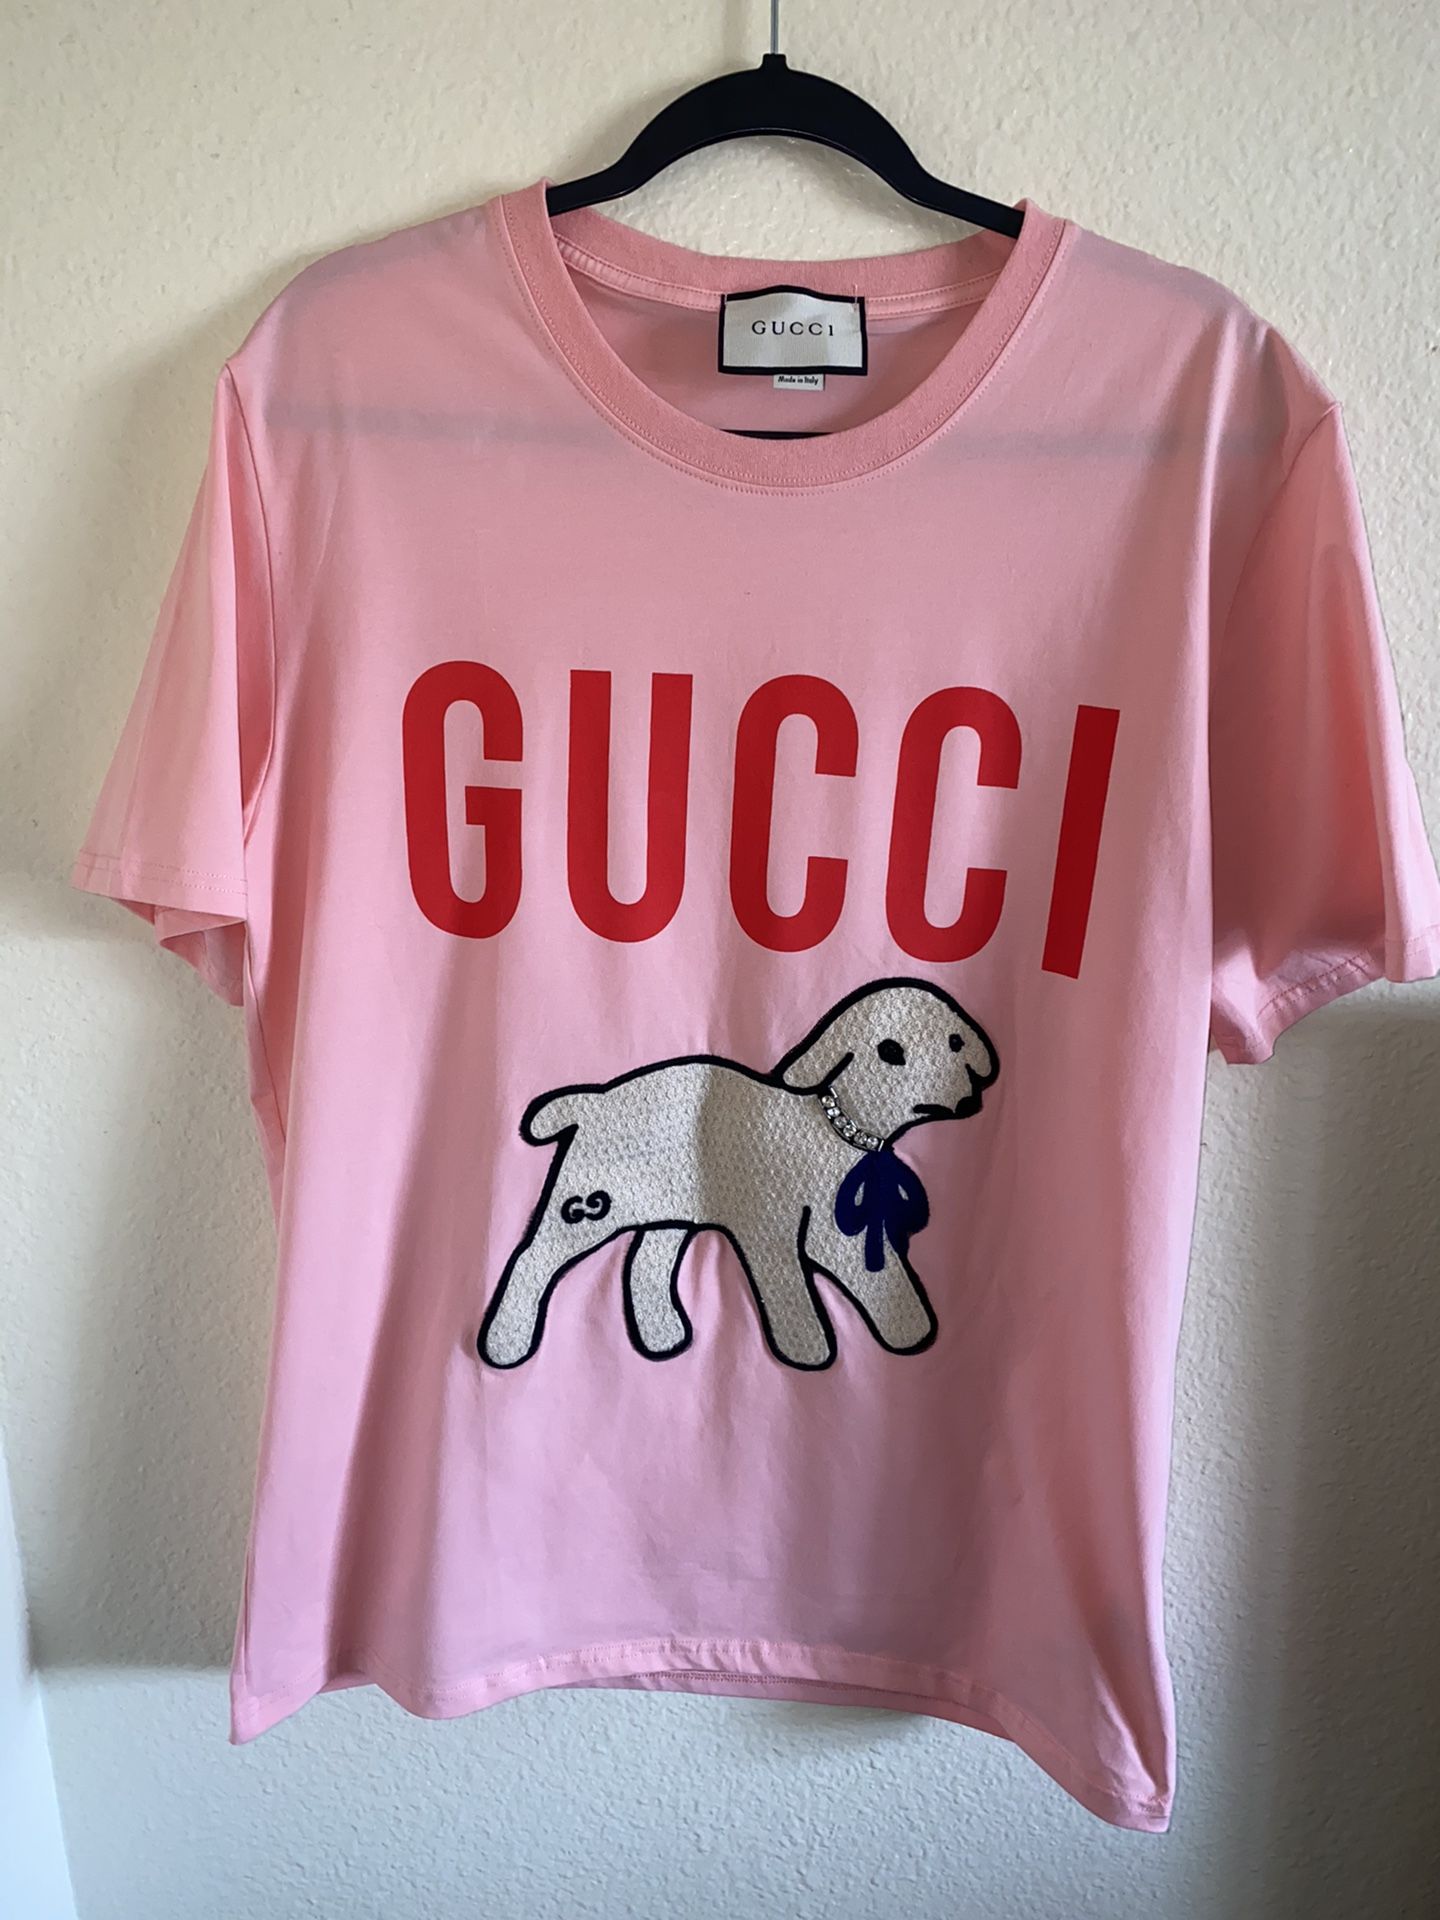 Designer Gucci shirt medium/large $180(new)